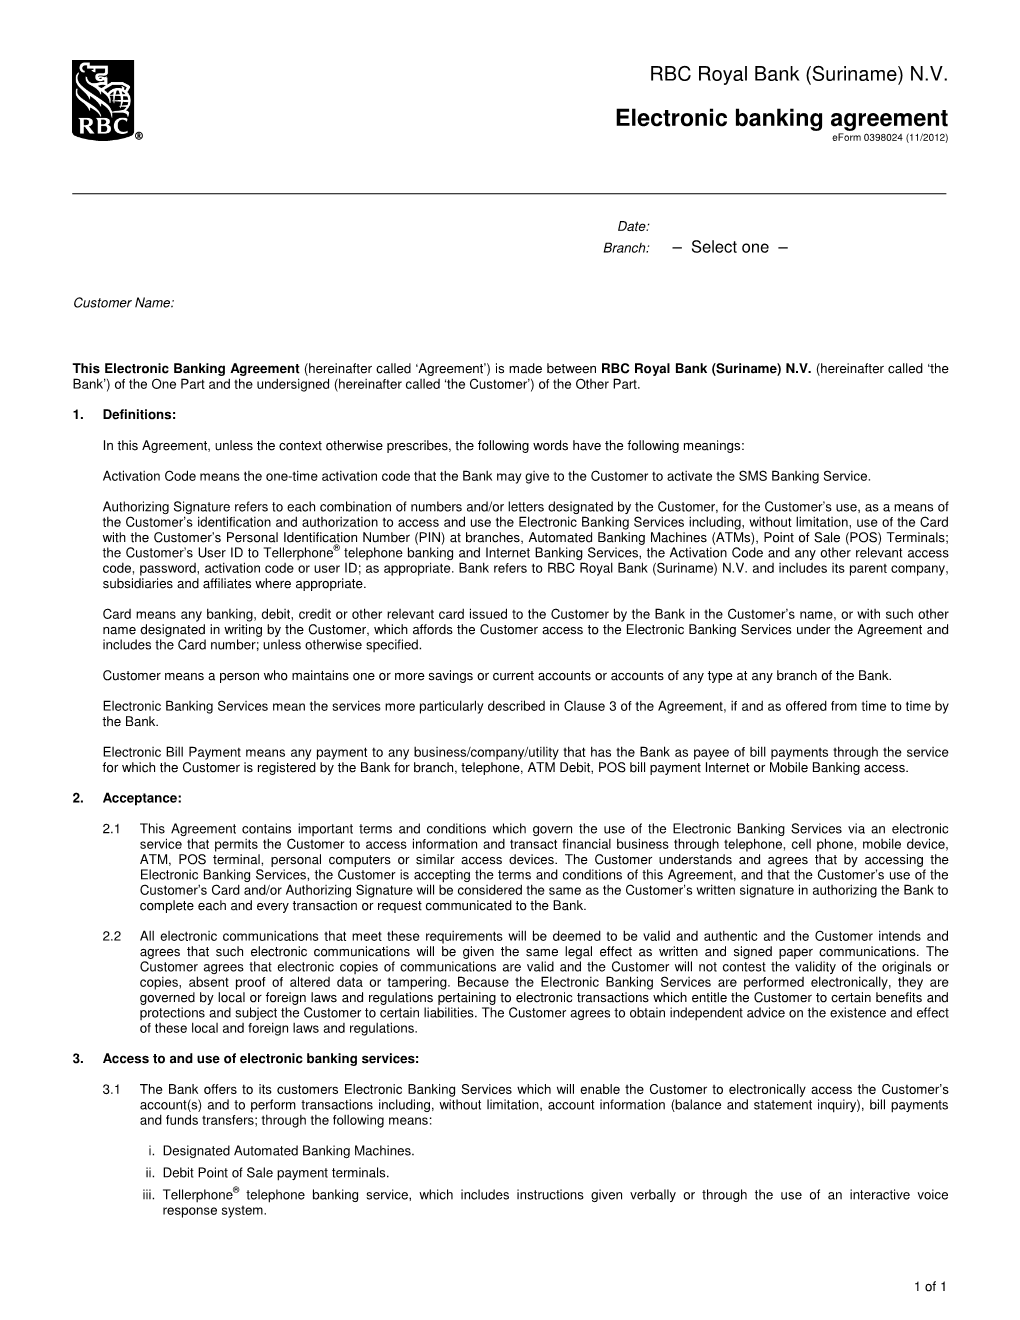 Electronic Banking Agreement Eform 0398024 (11/2012)